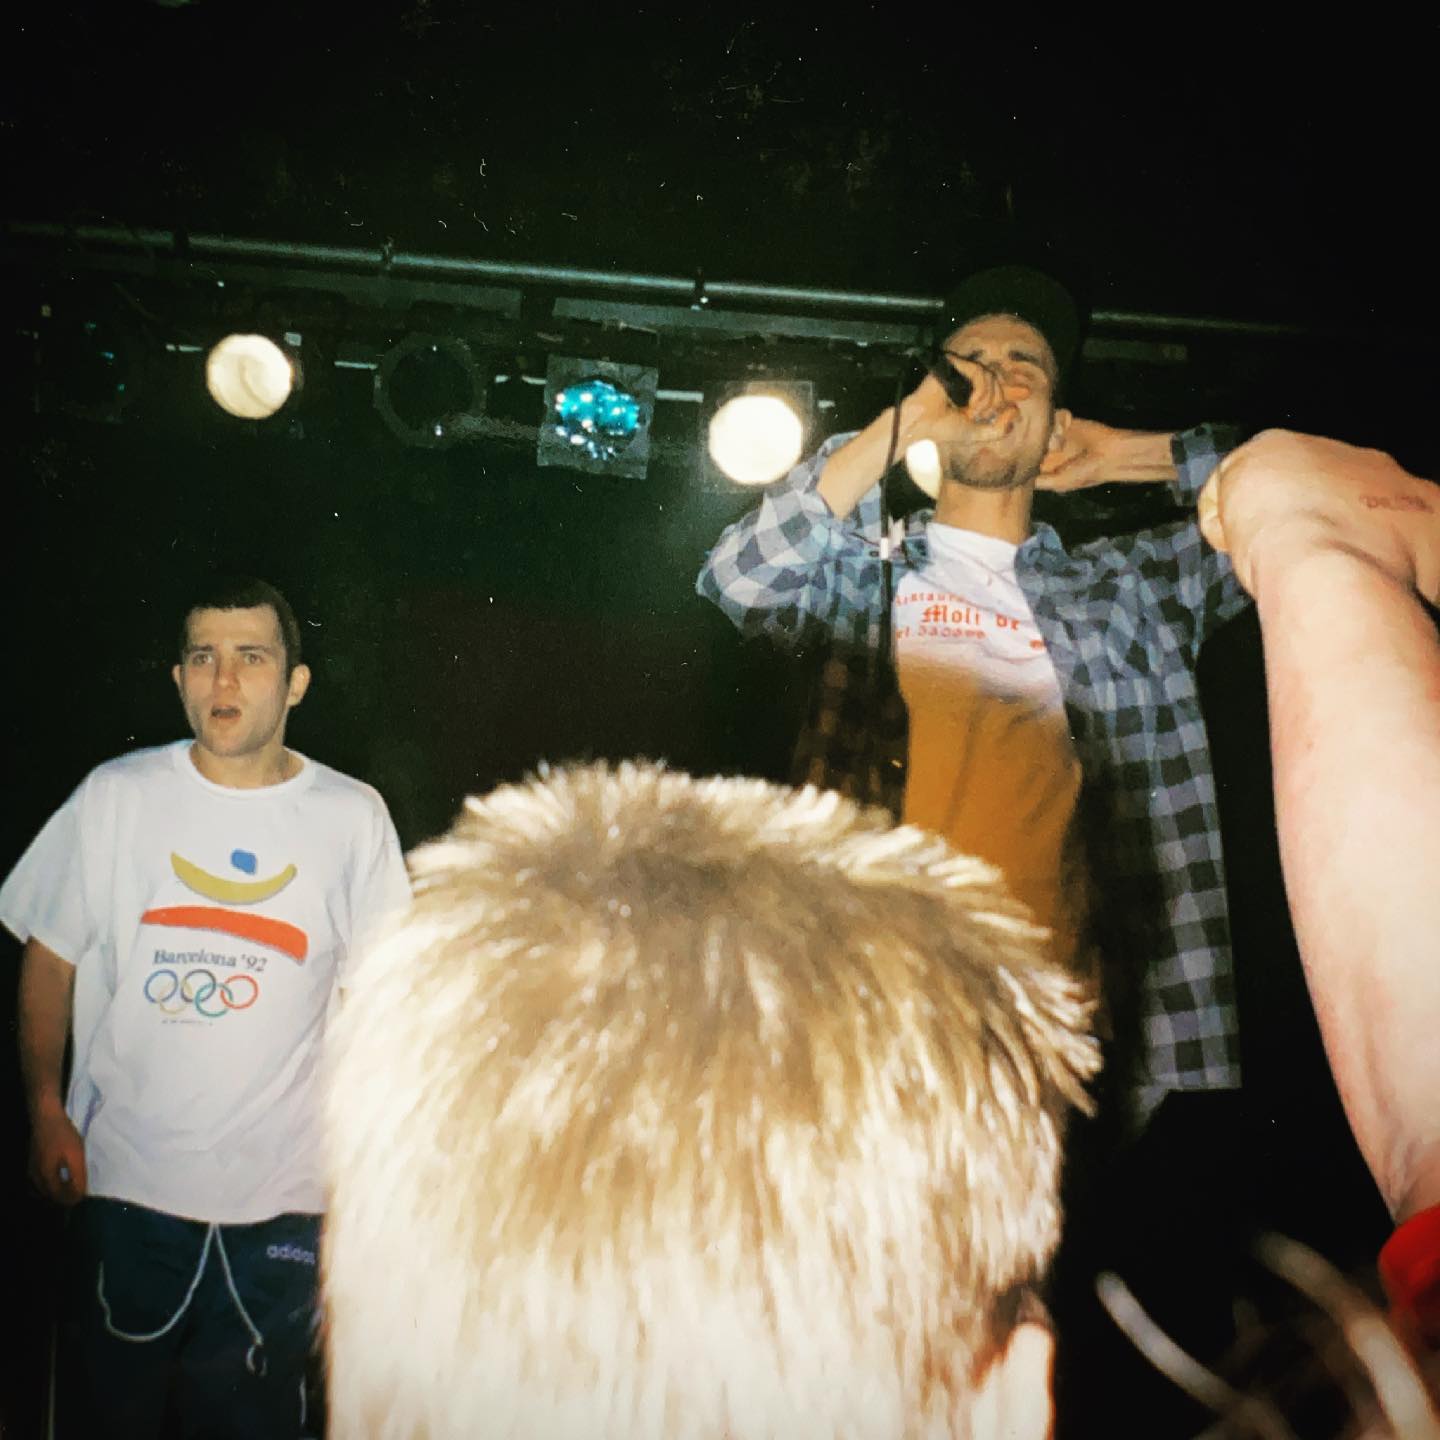 Osdorp Posse - Struik Heino NL - 2 March 1996 #hiphop @osdorpposseshop 📸 #gigpic by @twentylandcrew